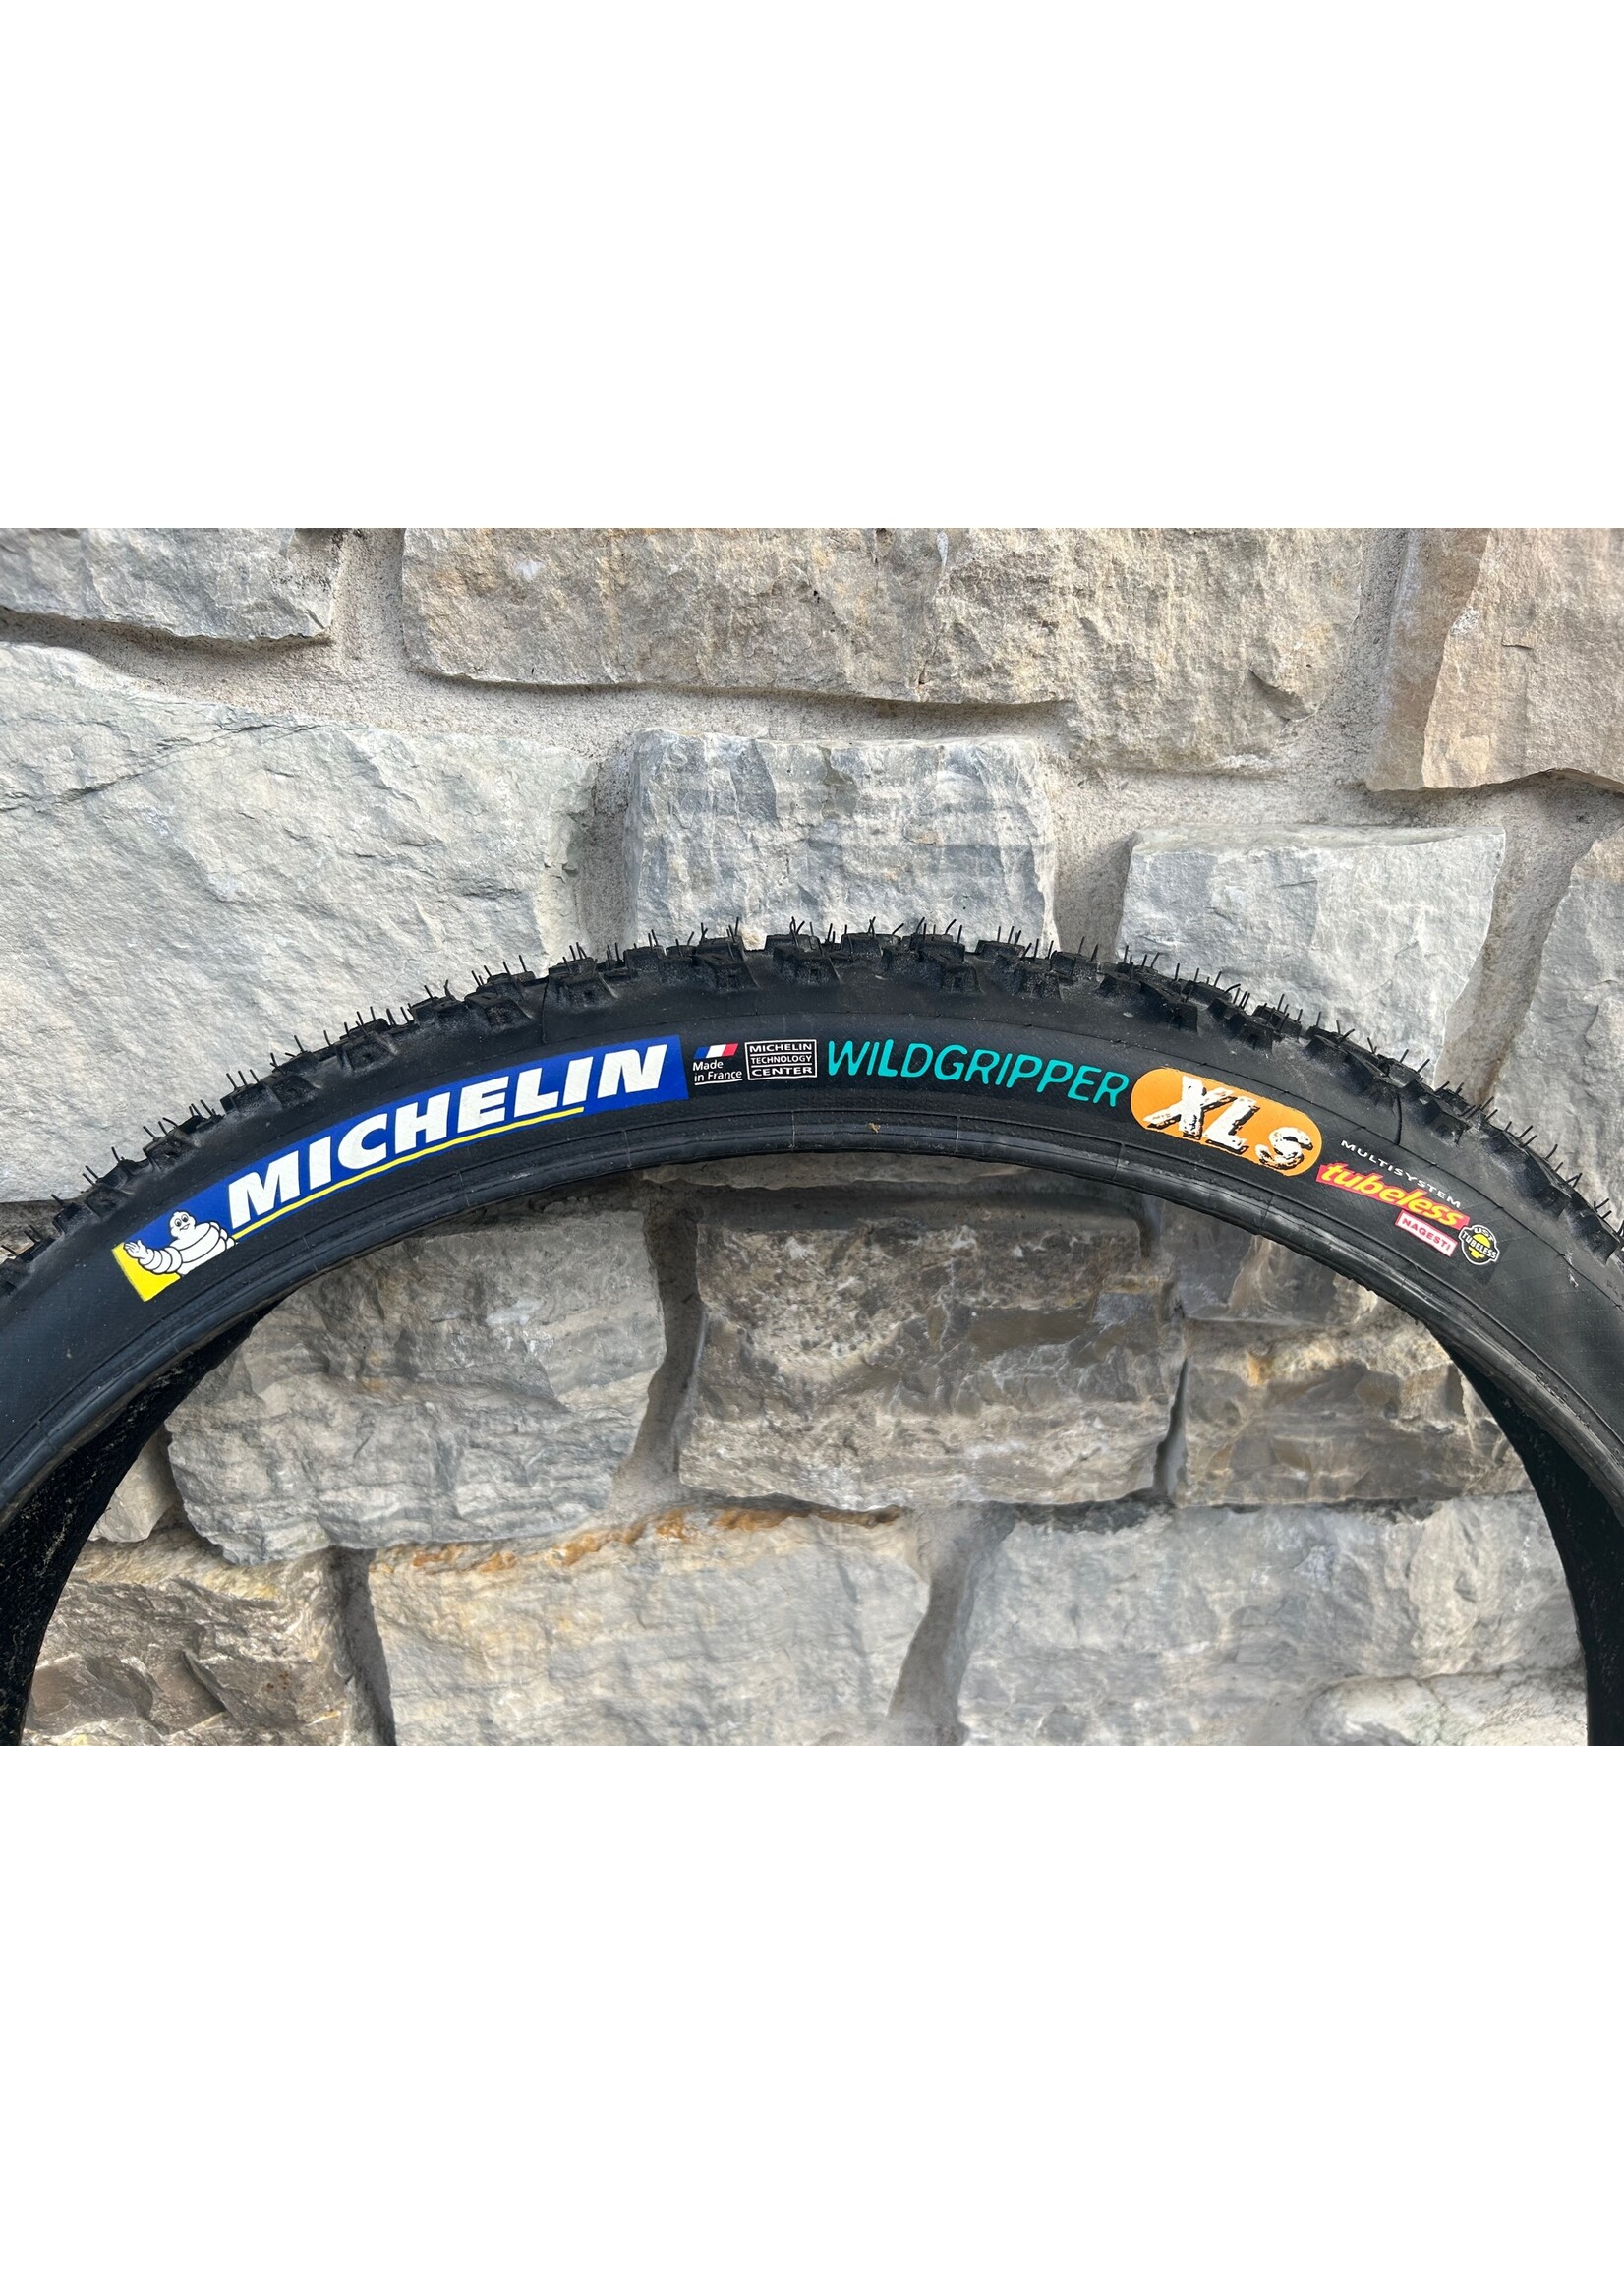 Michelin Michelin Wildgripper XLs 26x2.1 Tire